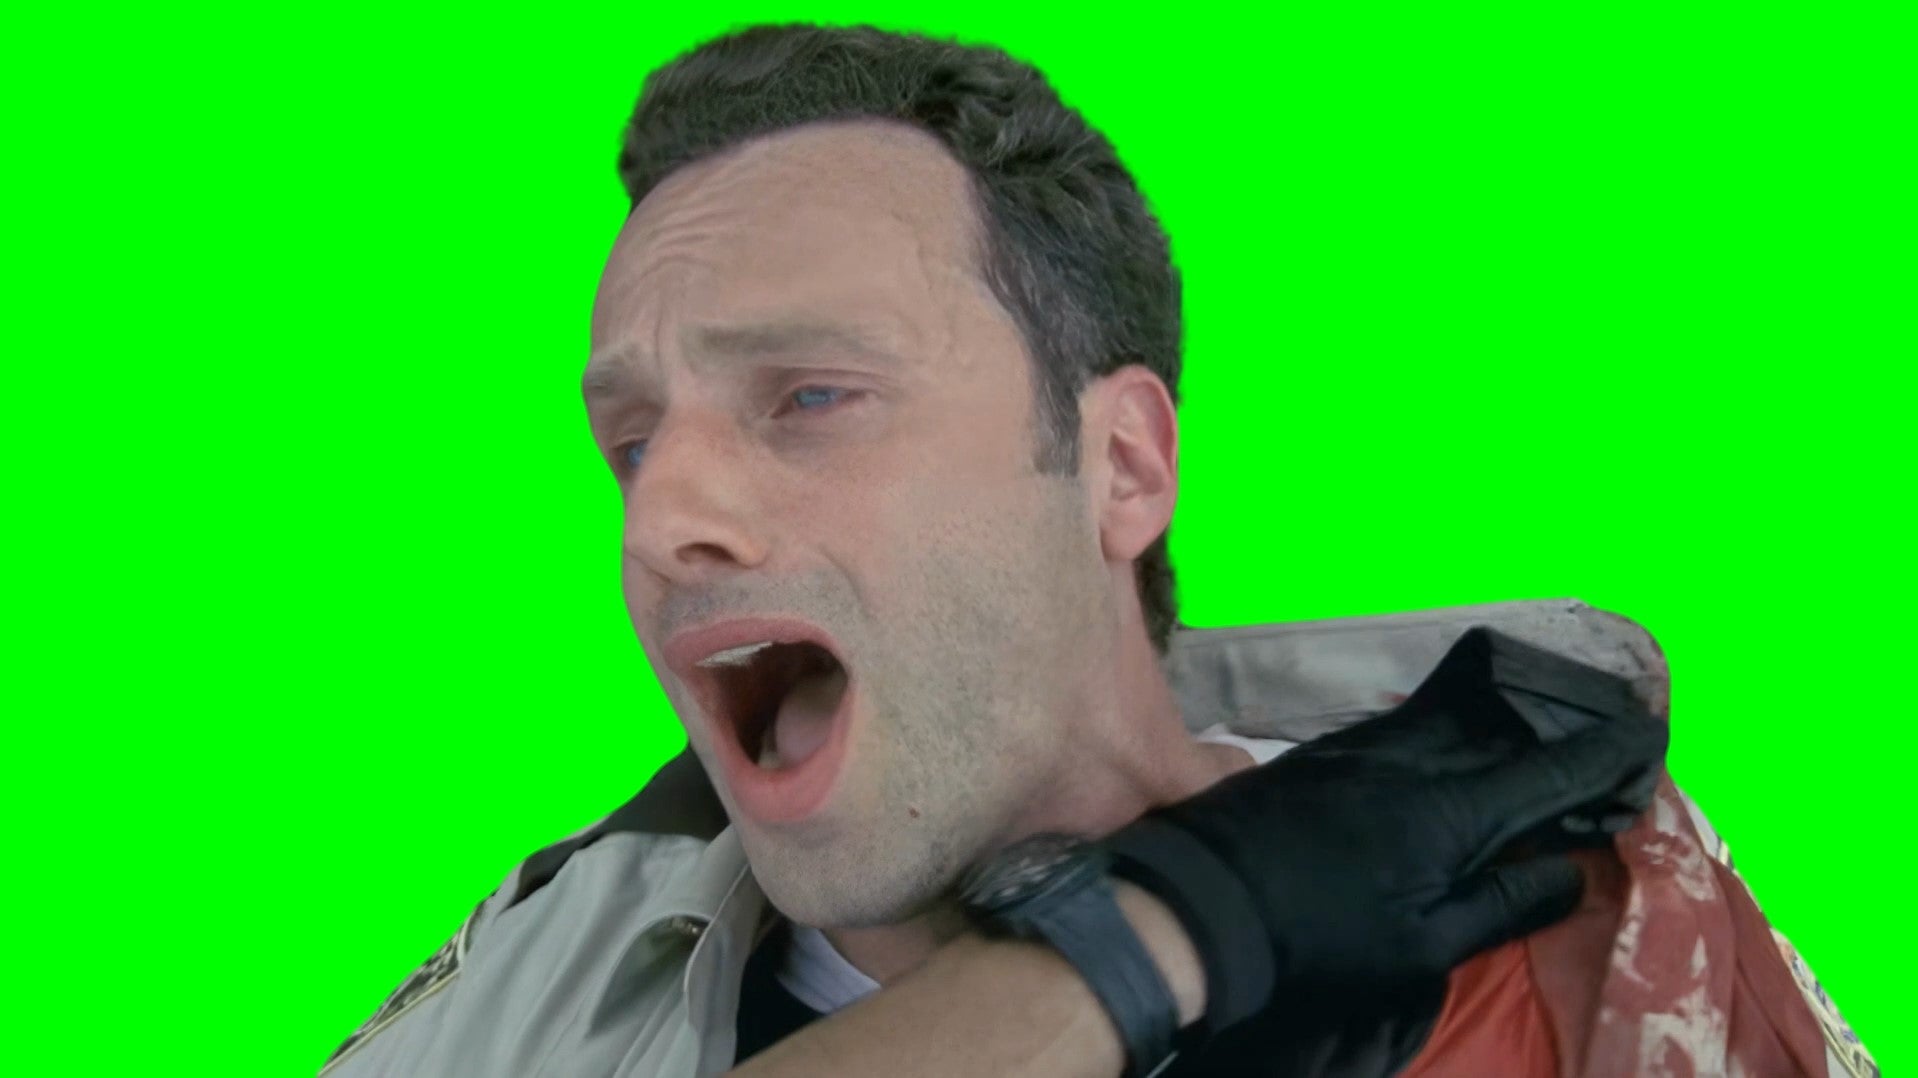 Rick Grimes bleeding out - The Walking Dead (Green Screen)